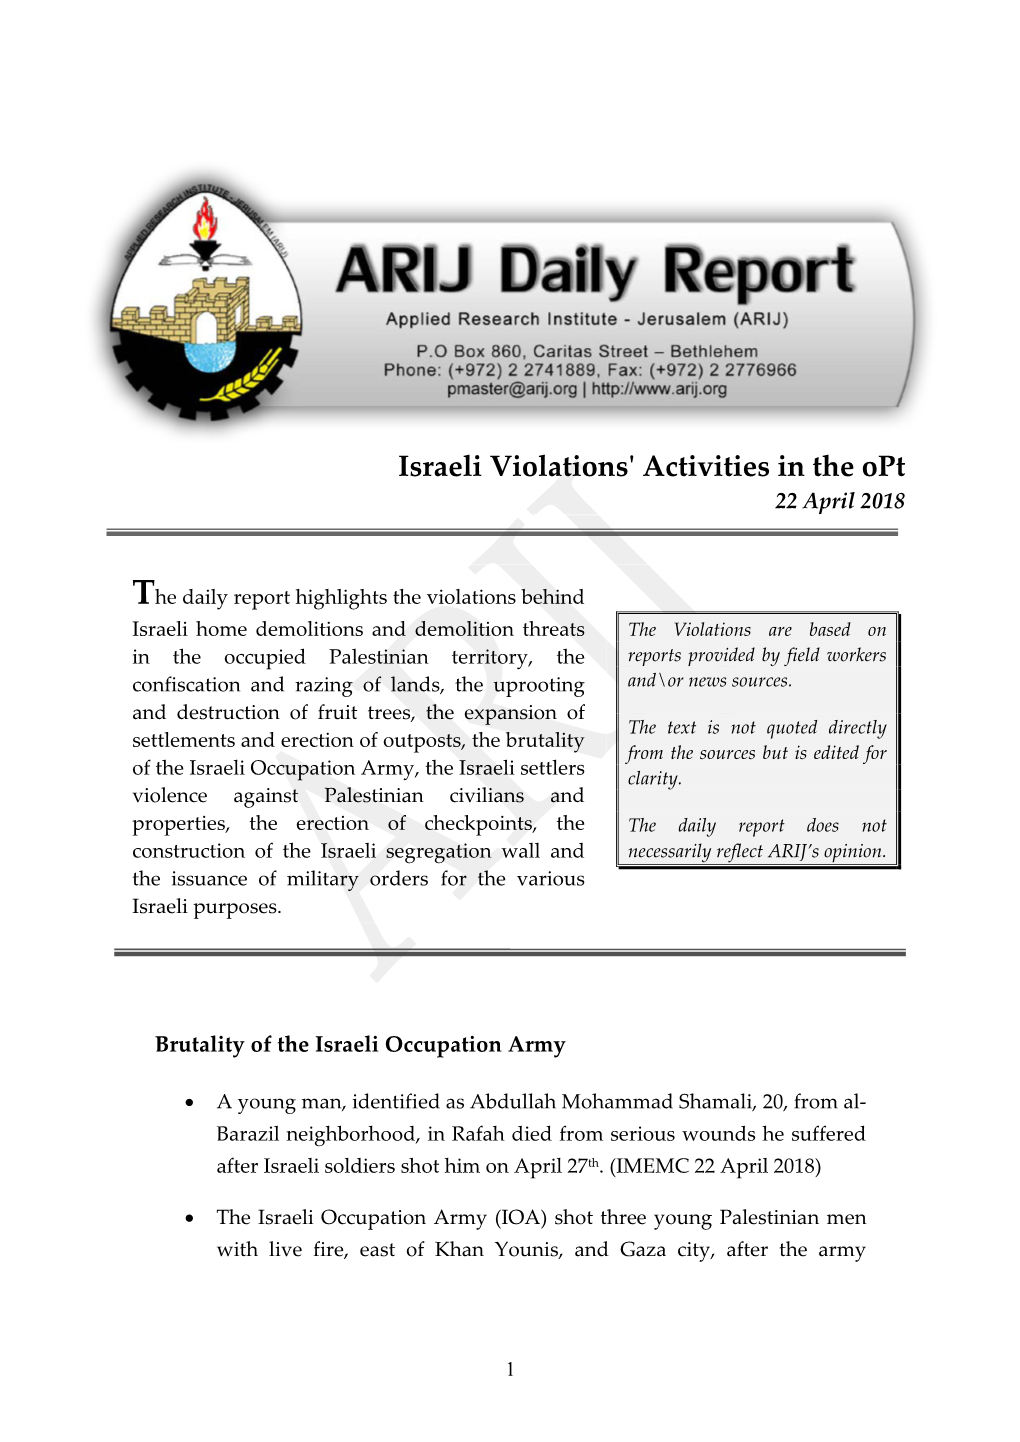 Israeli Violations' Activities in the Opt 22 April 2018